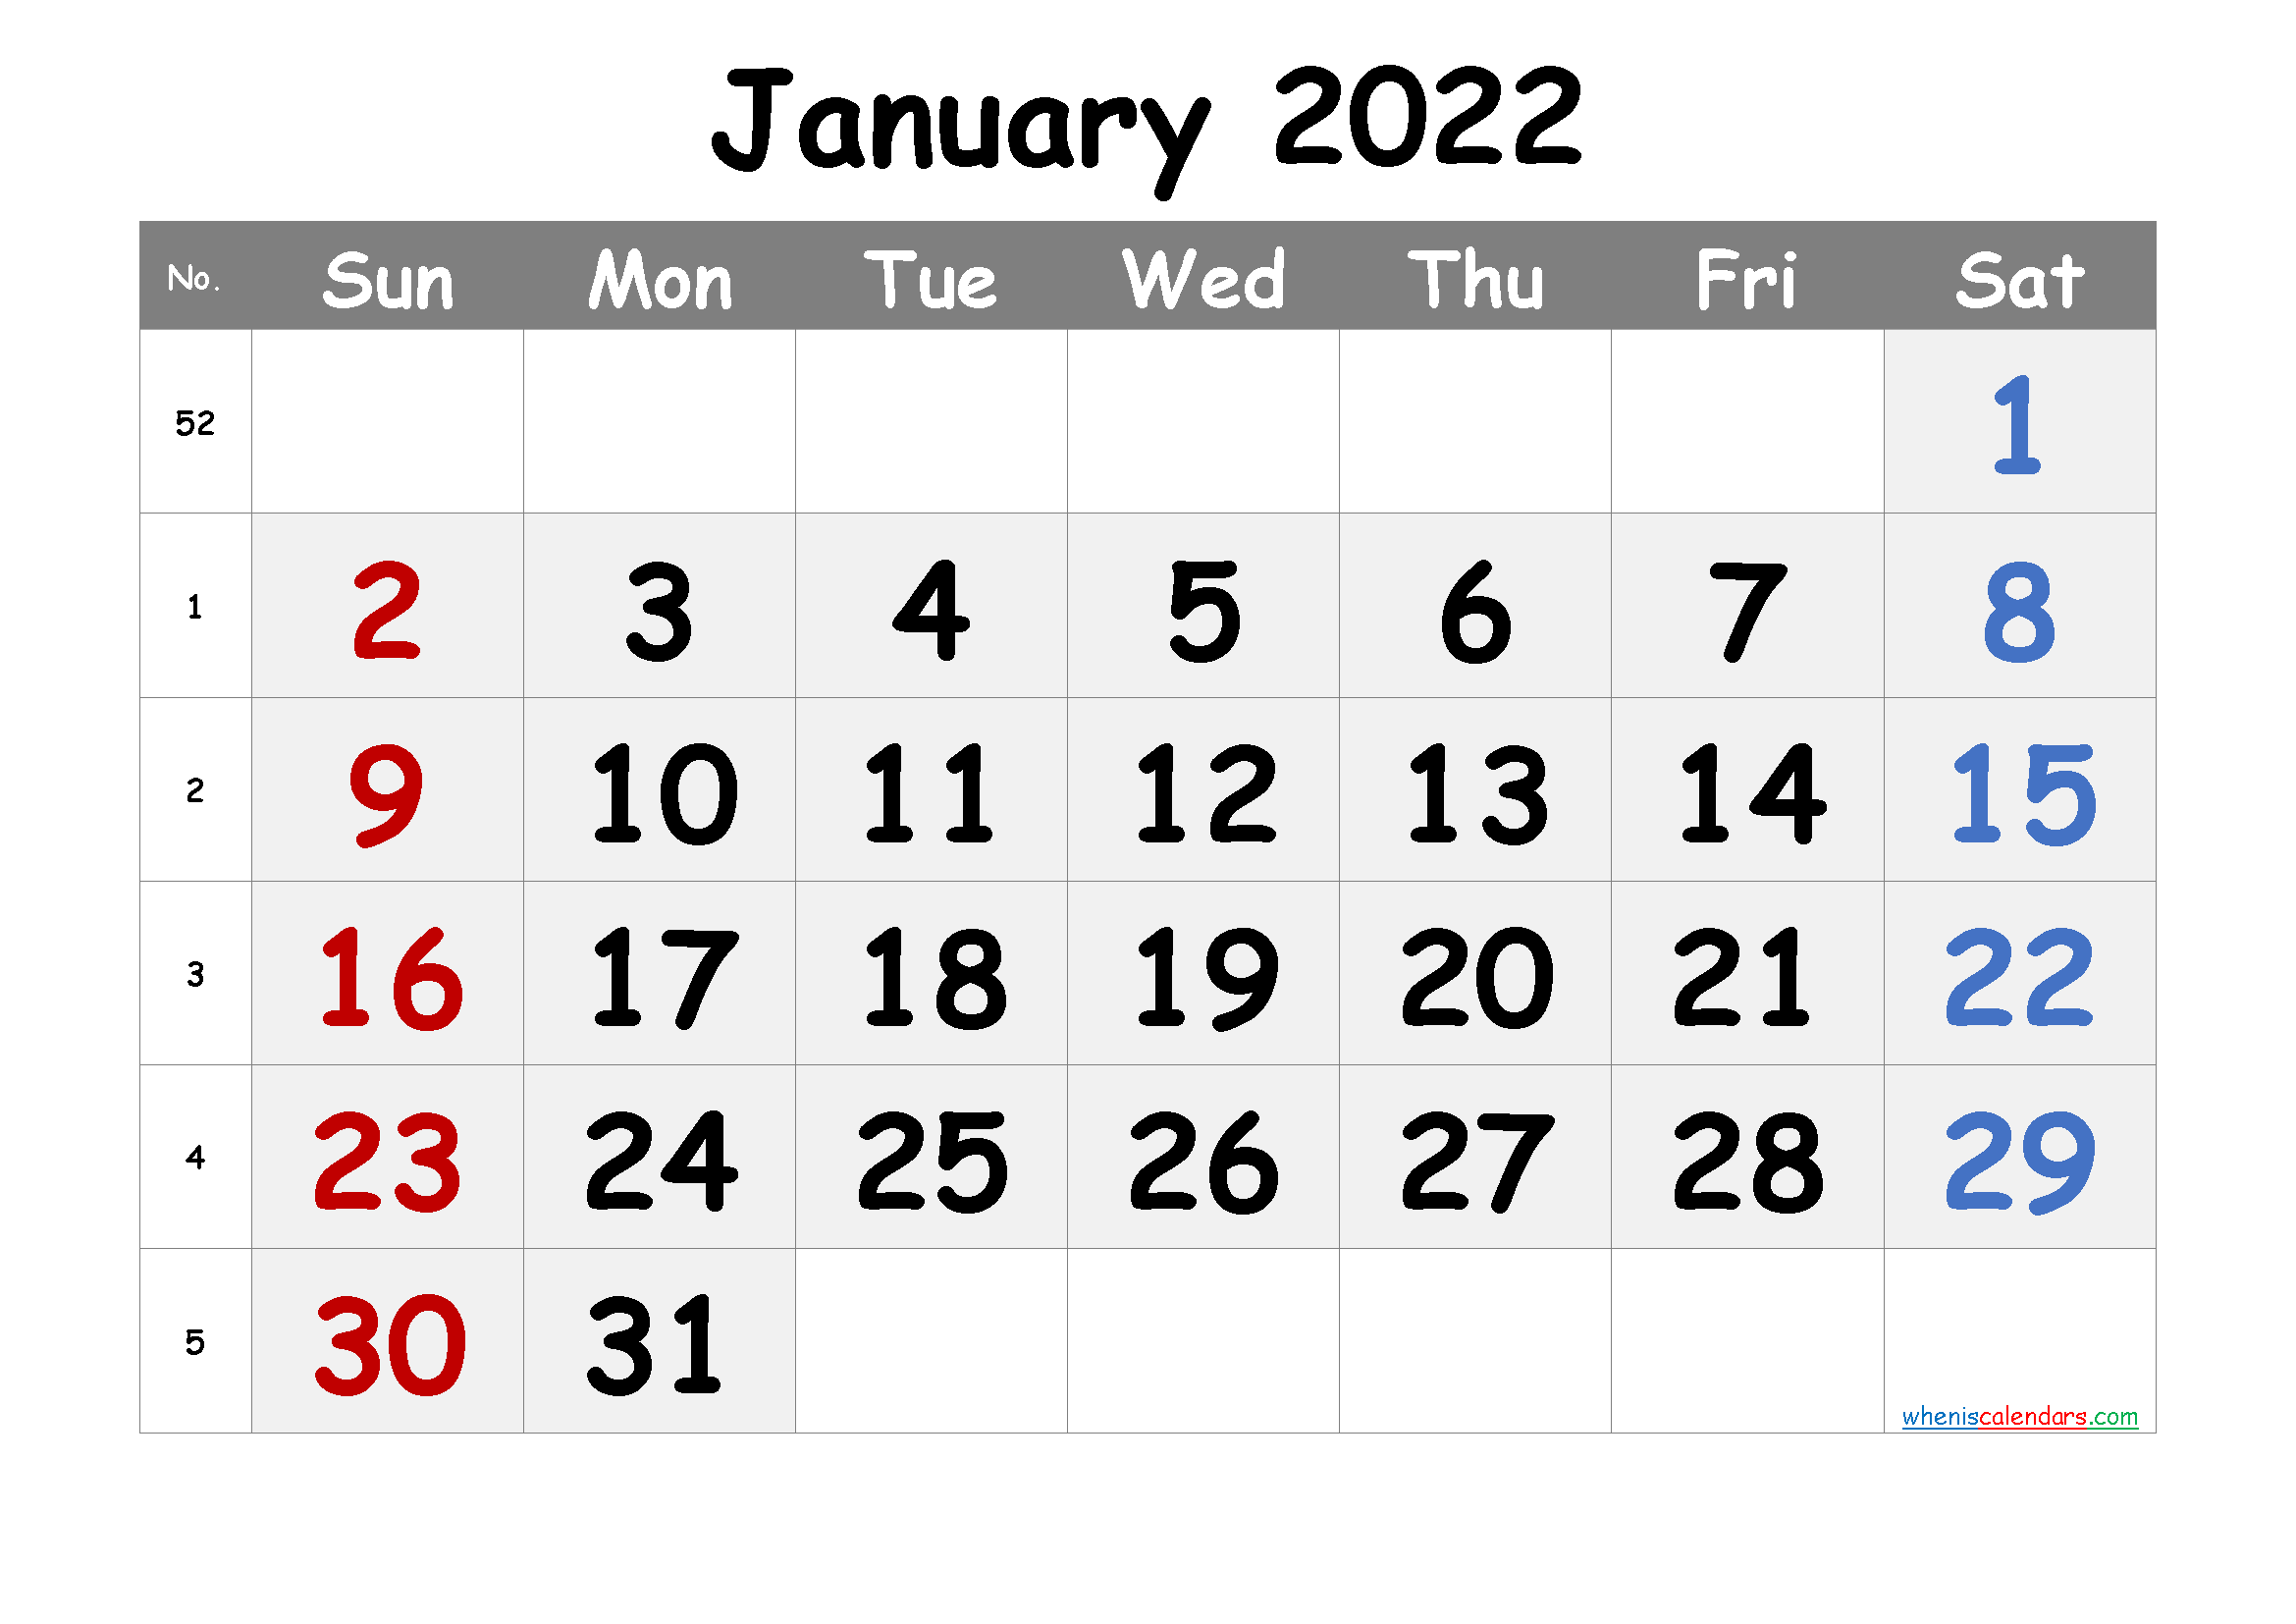 Free Printable January 2022 Calendar